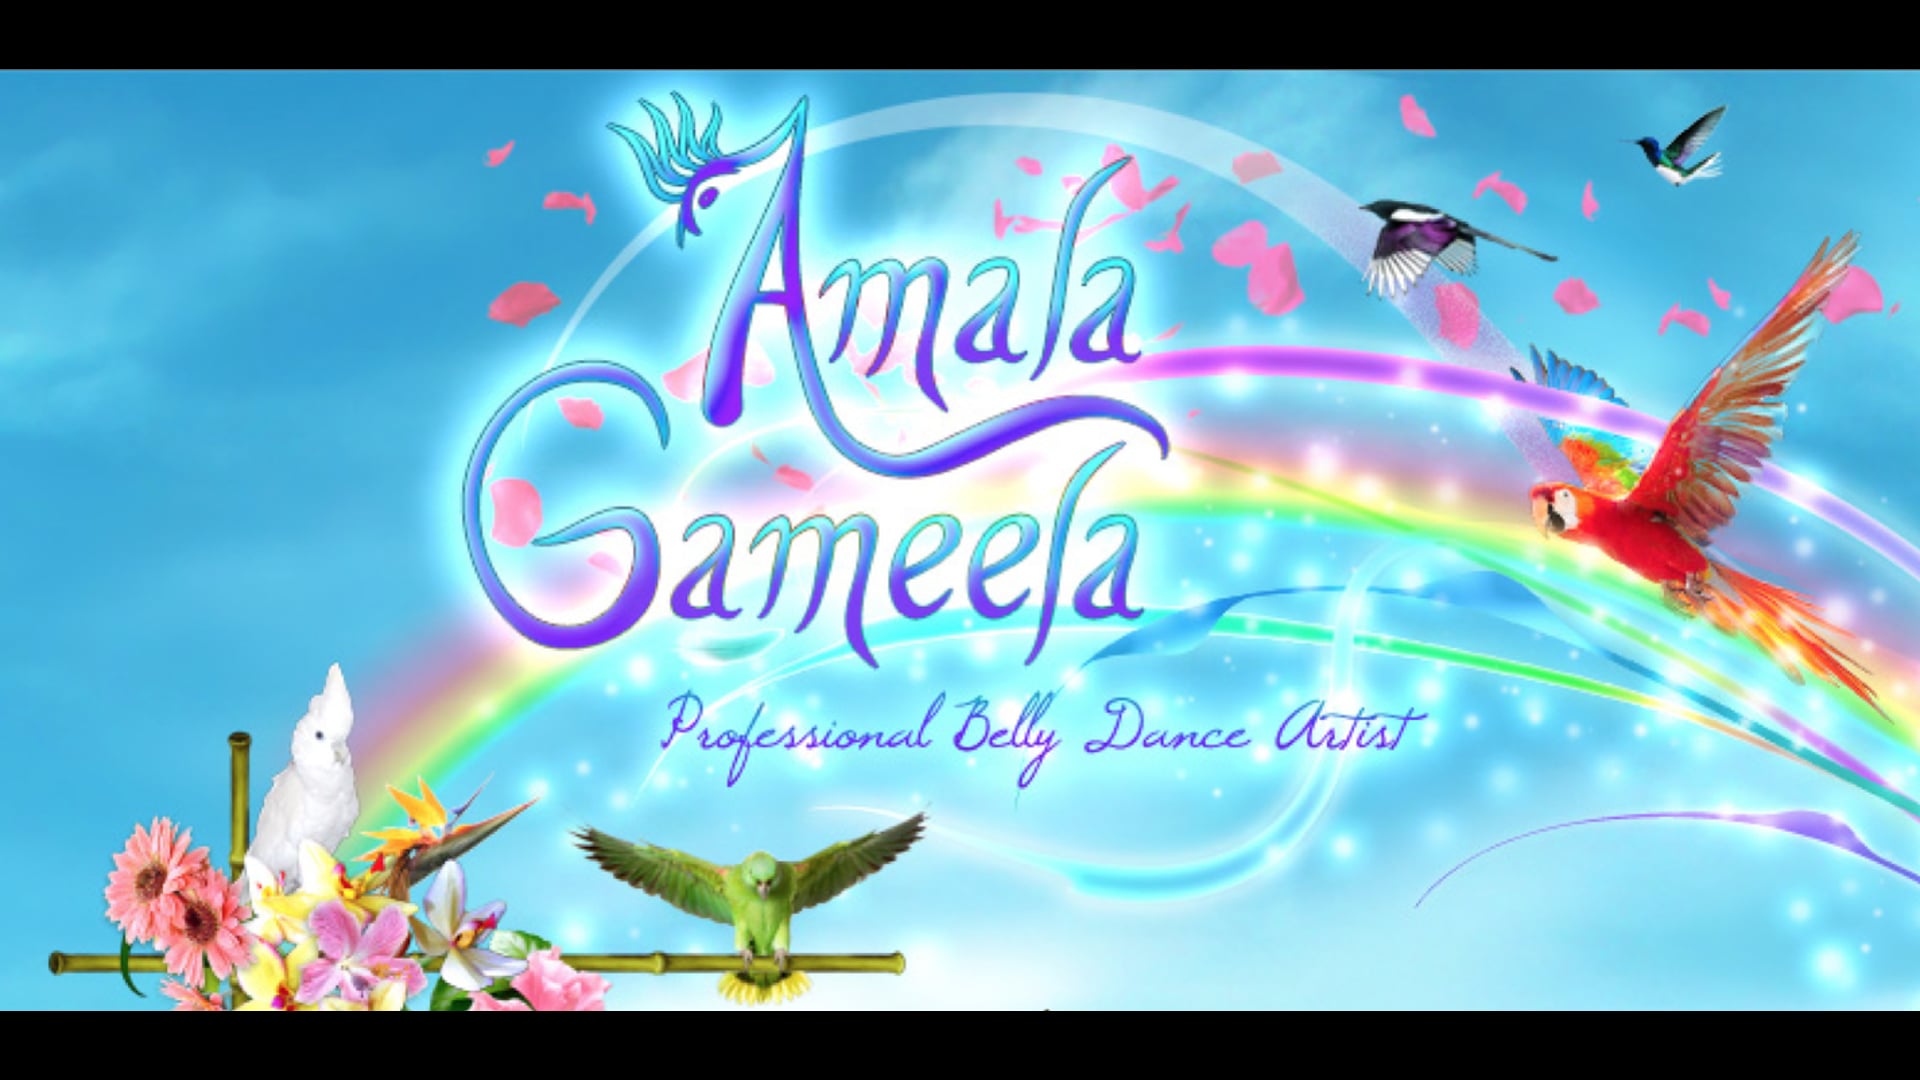 Promotional video thumbnail 1 for Amala Gameela